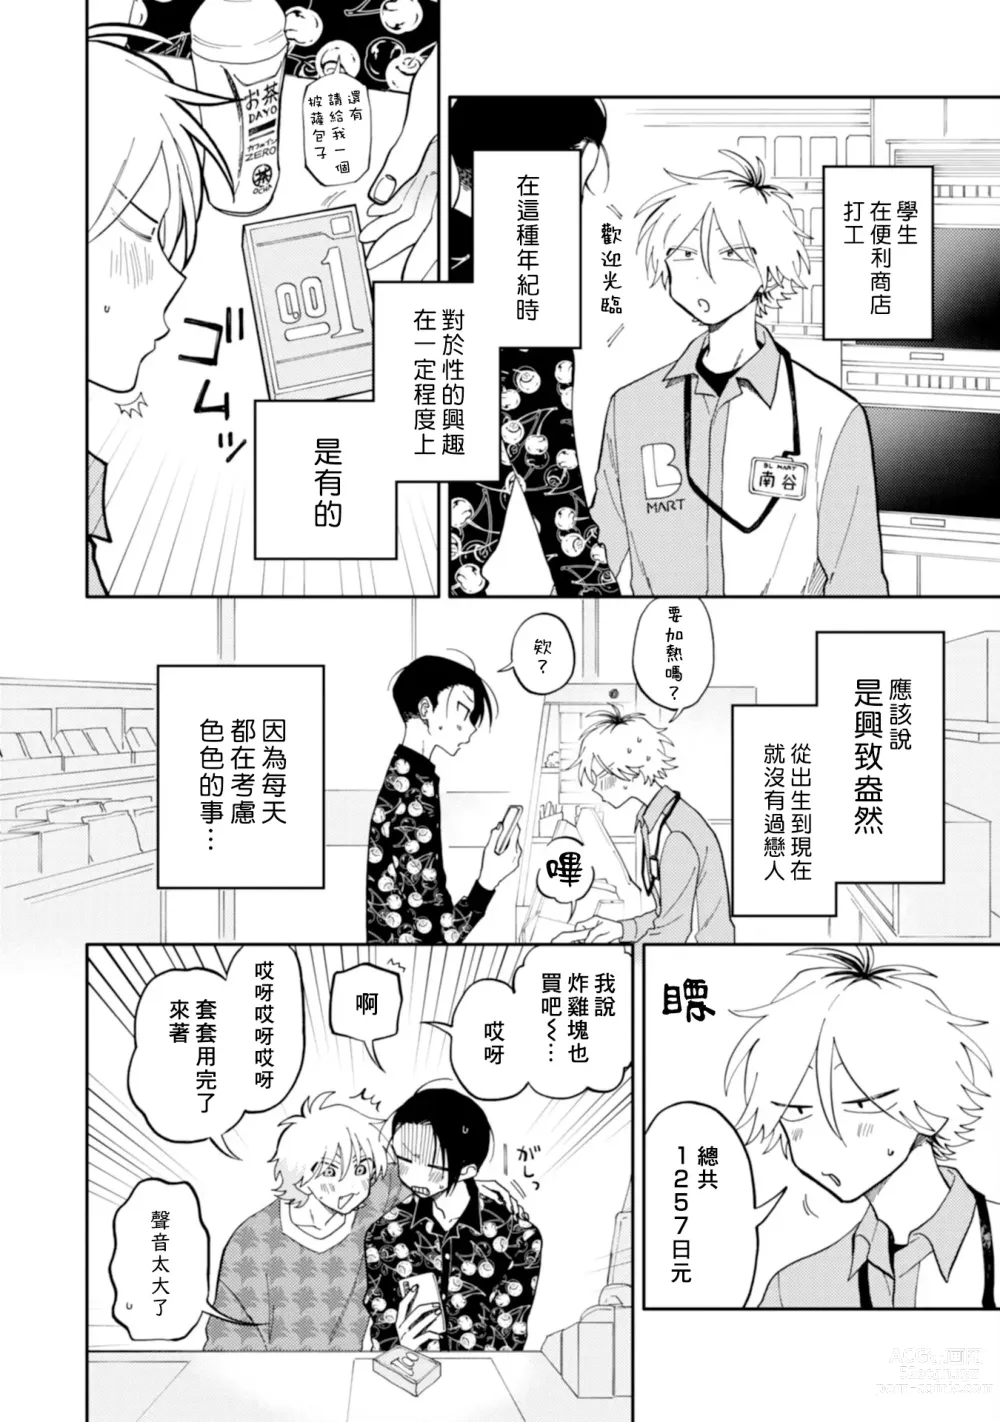 Page 6 of manga 北山君与南谷君